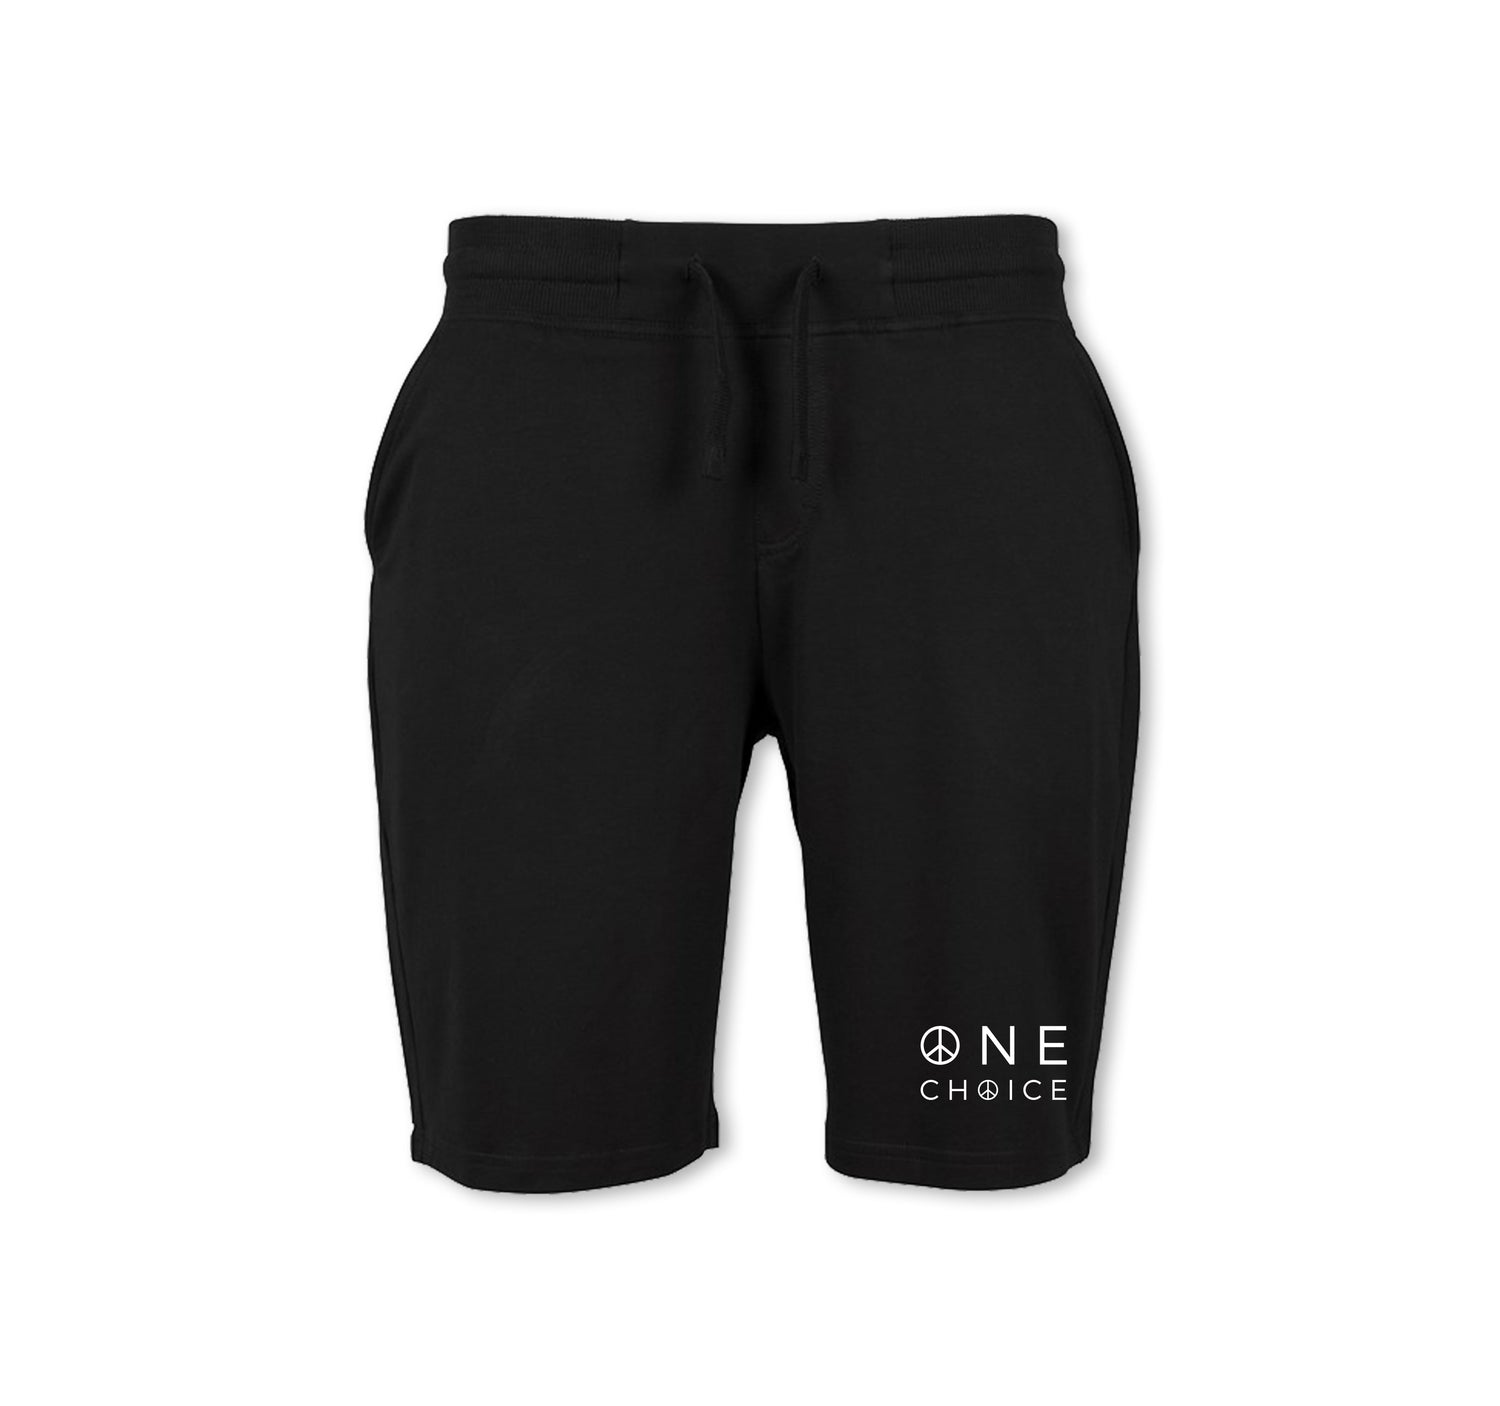 One Choice Shorts - Organic Cotton - One Choice Apparel